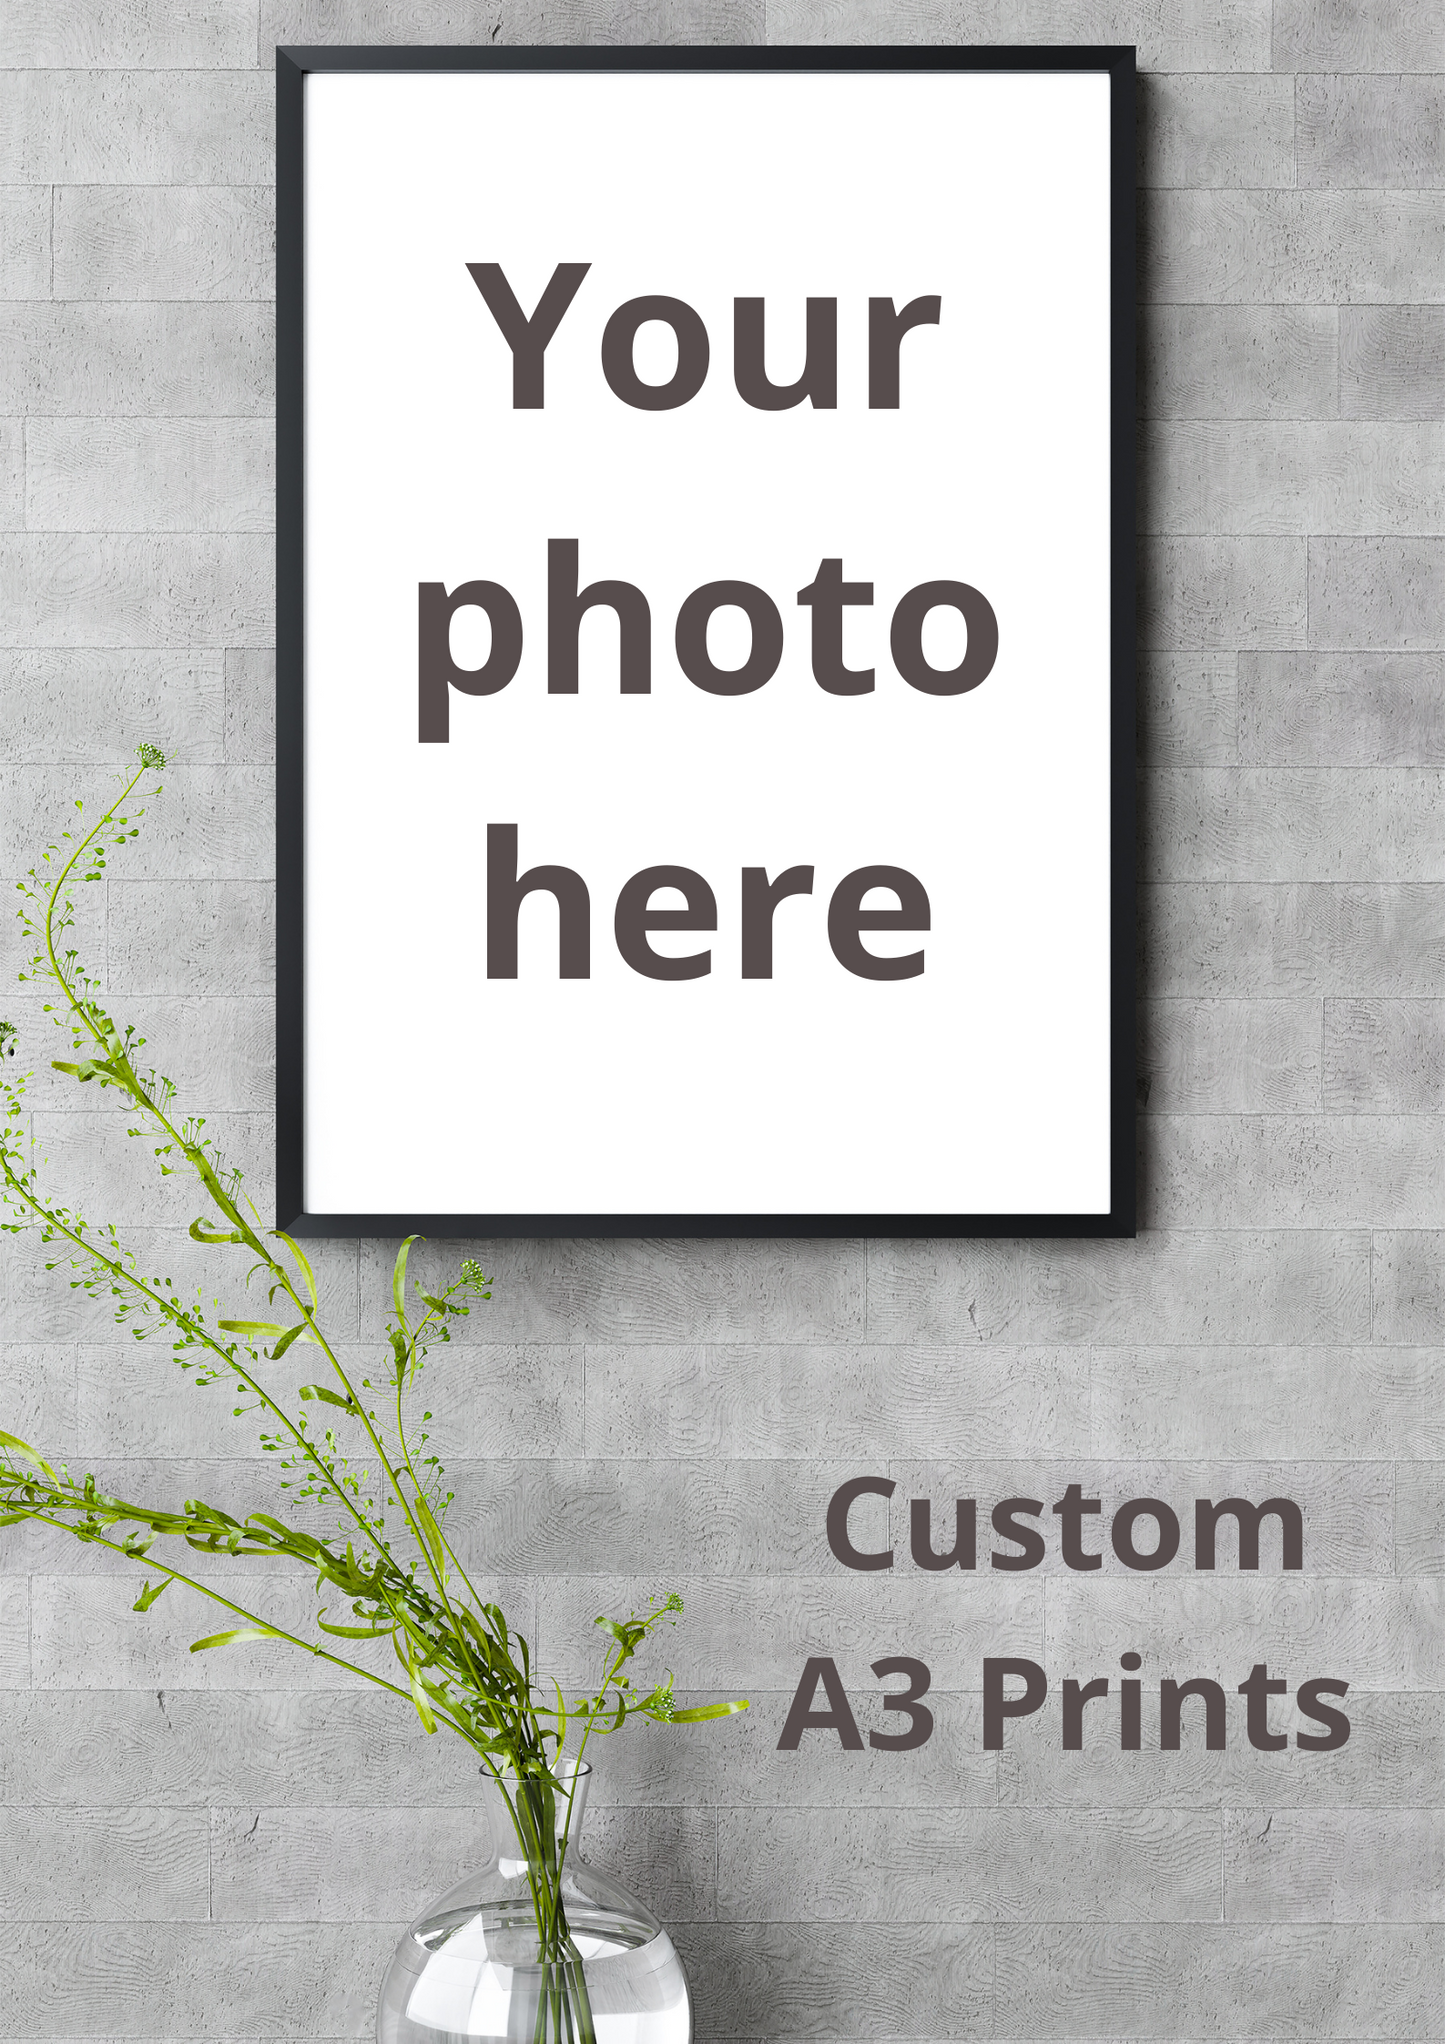 High Quality A3 Custom Poster Prints